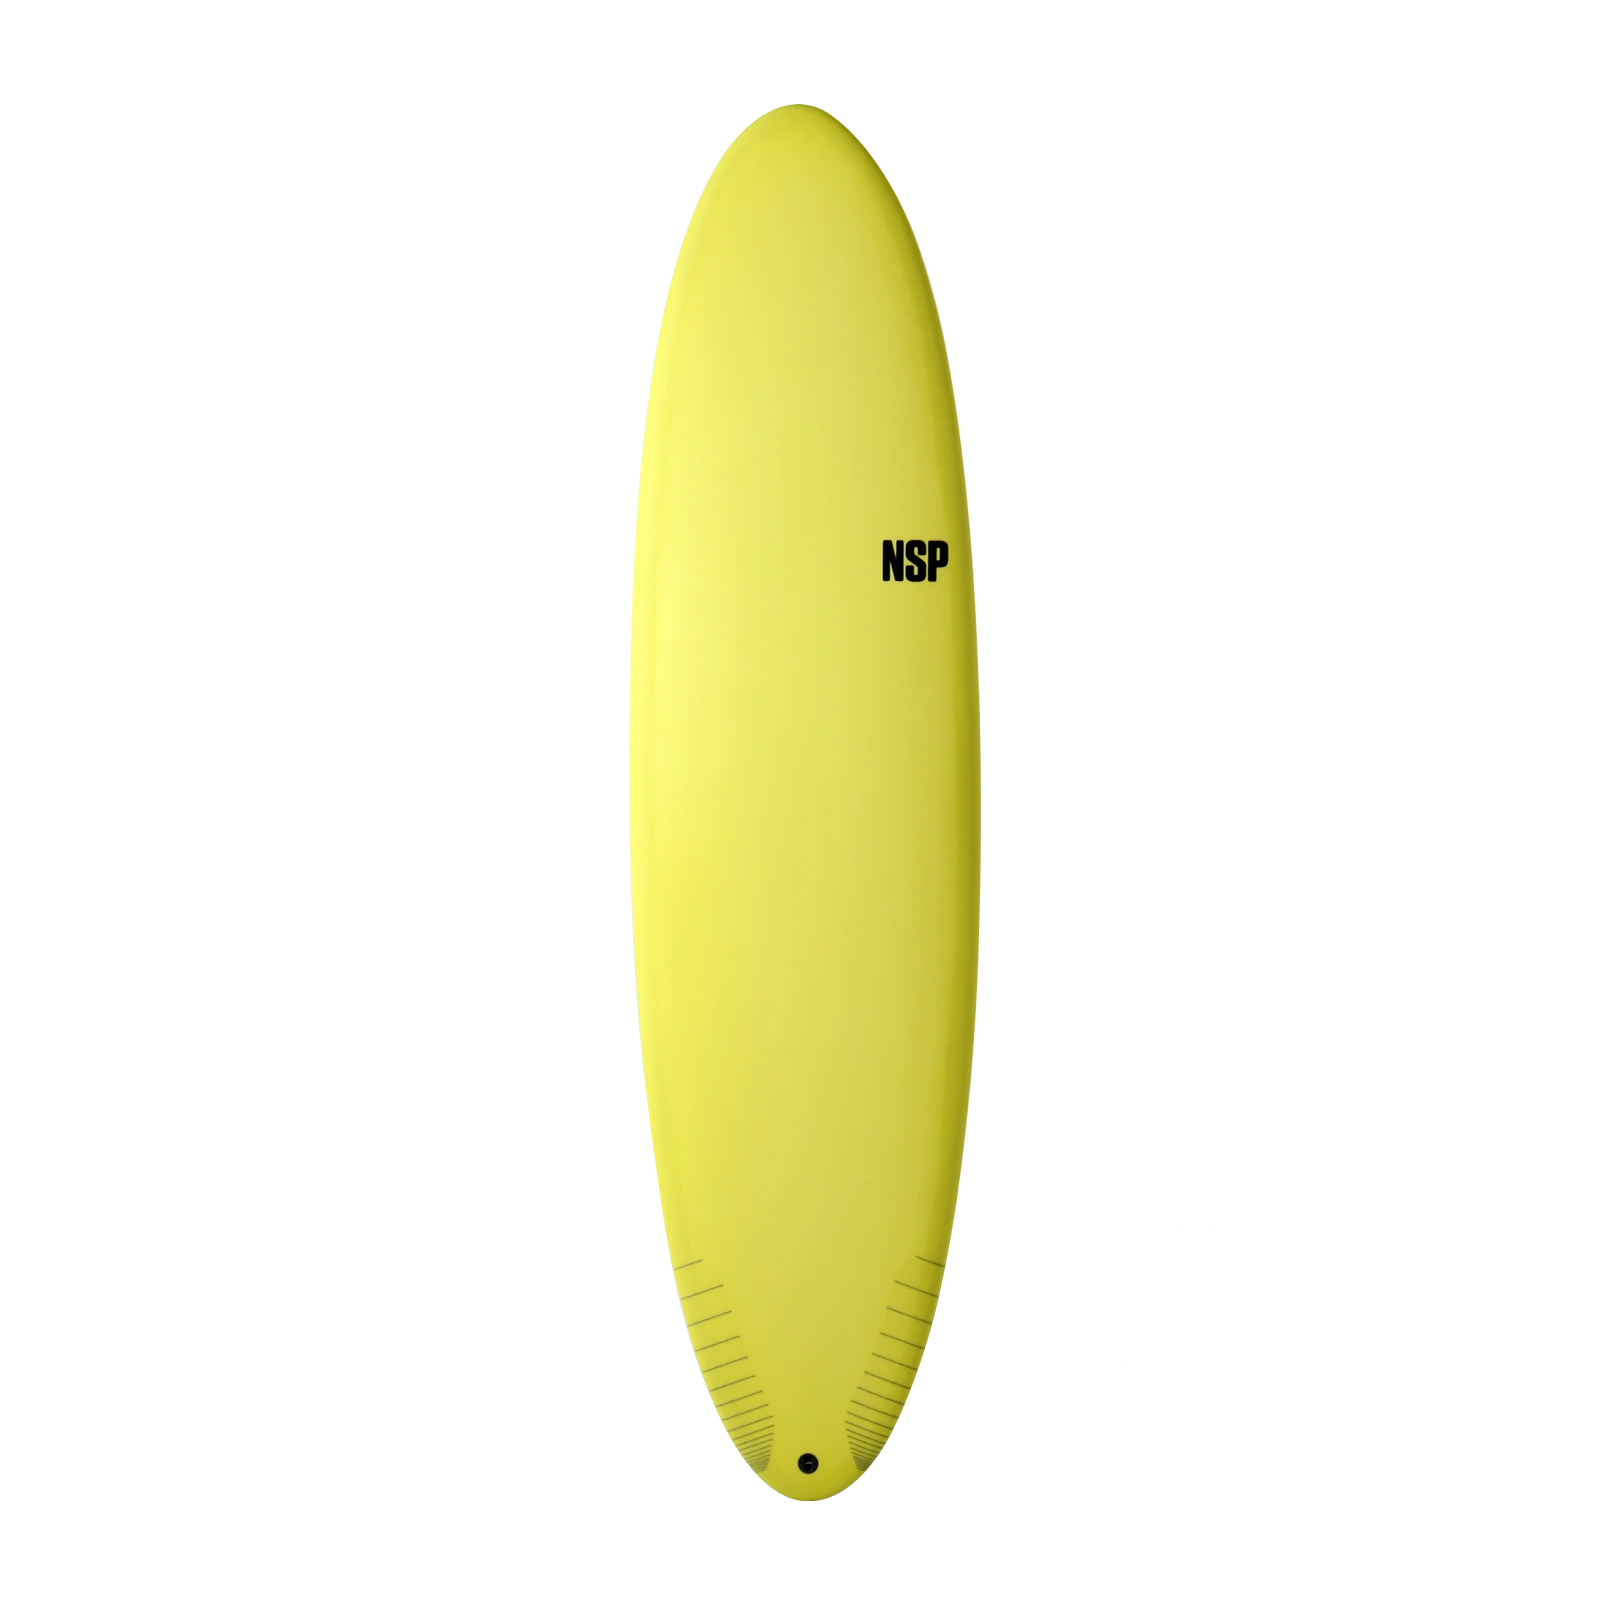 Funboard Surfboards NSP Protech Lemon Zest Tint